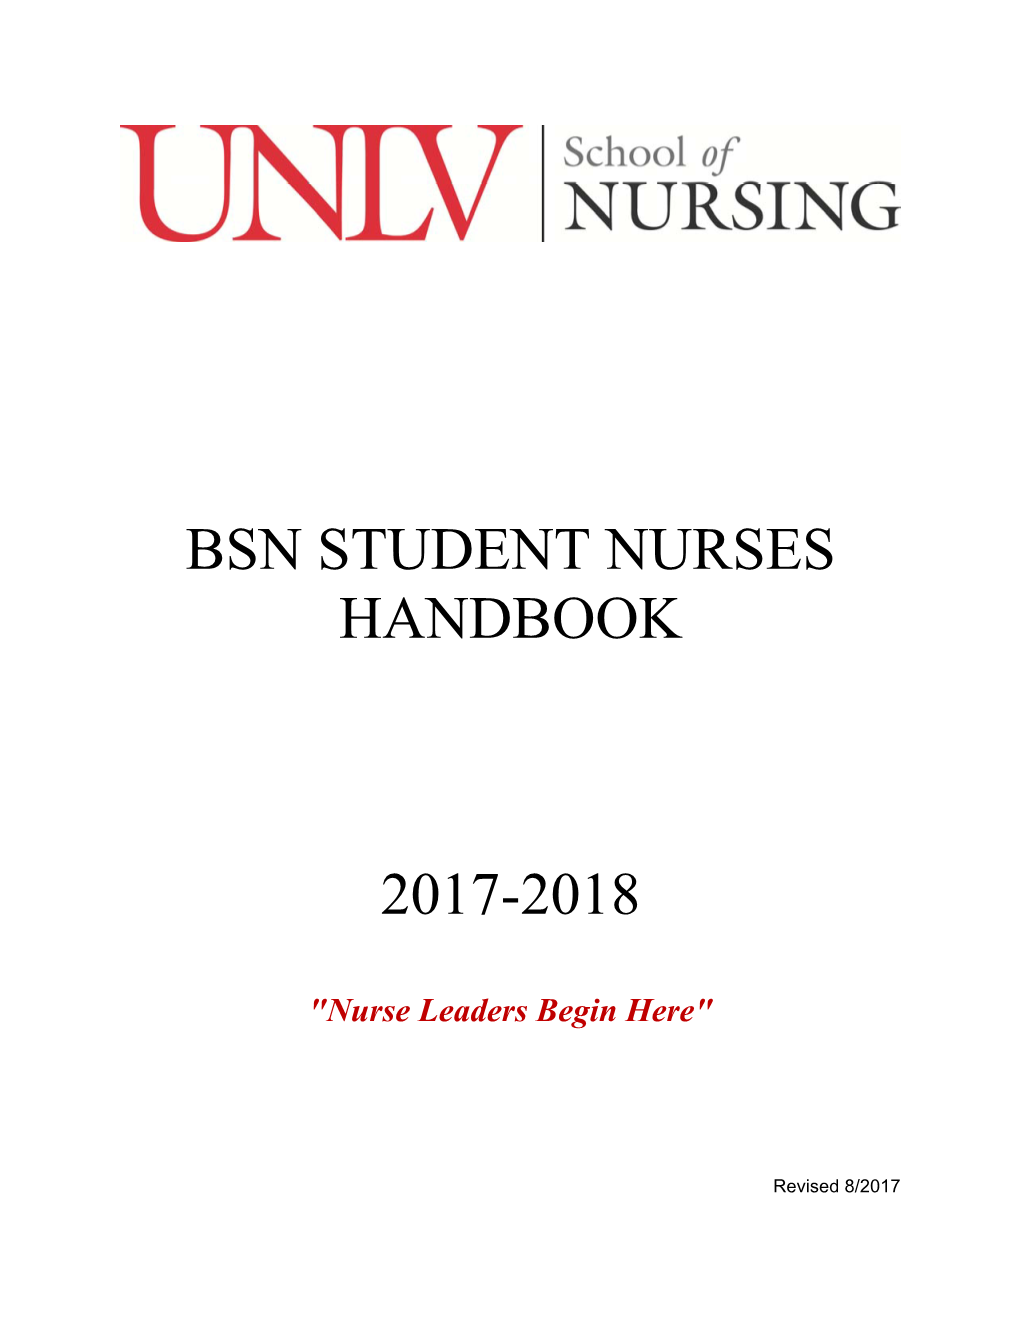 Bsn Student Nurses Handbook 2017-2018